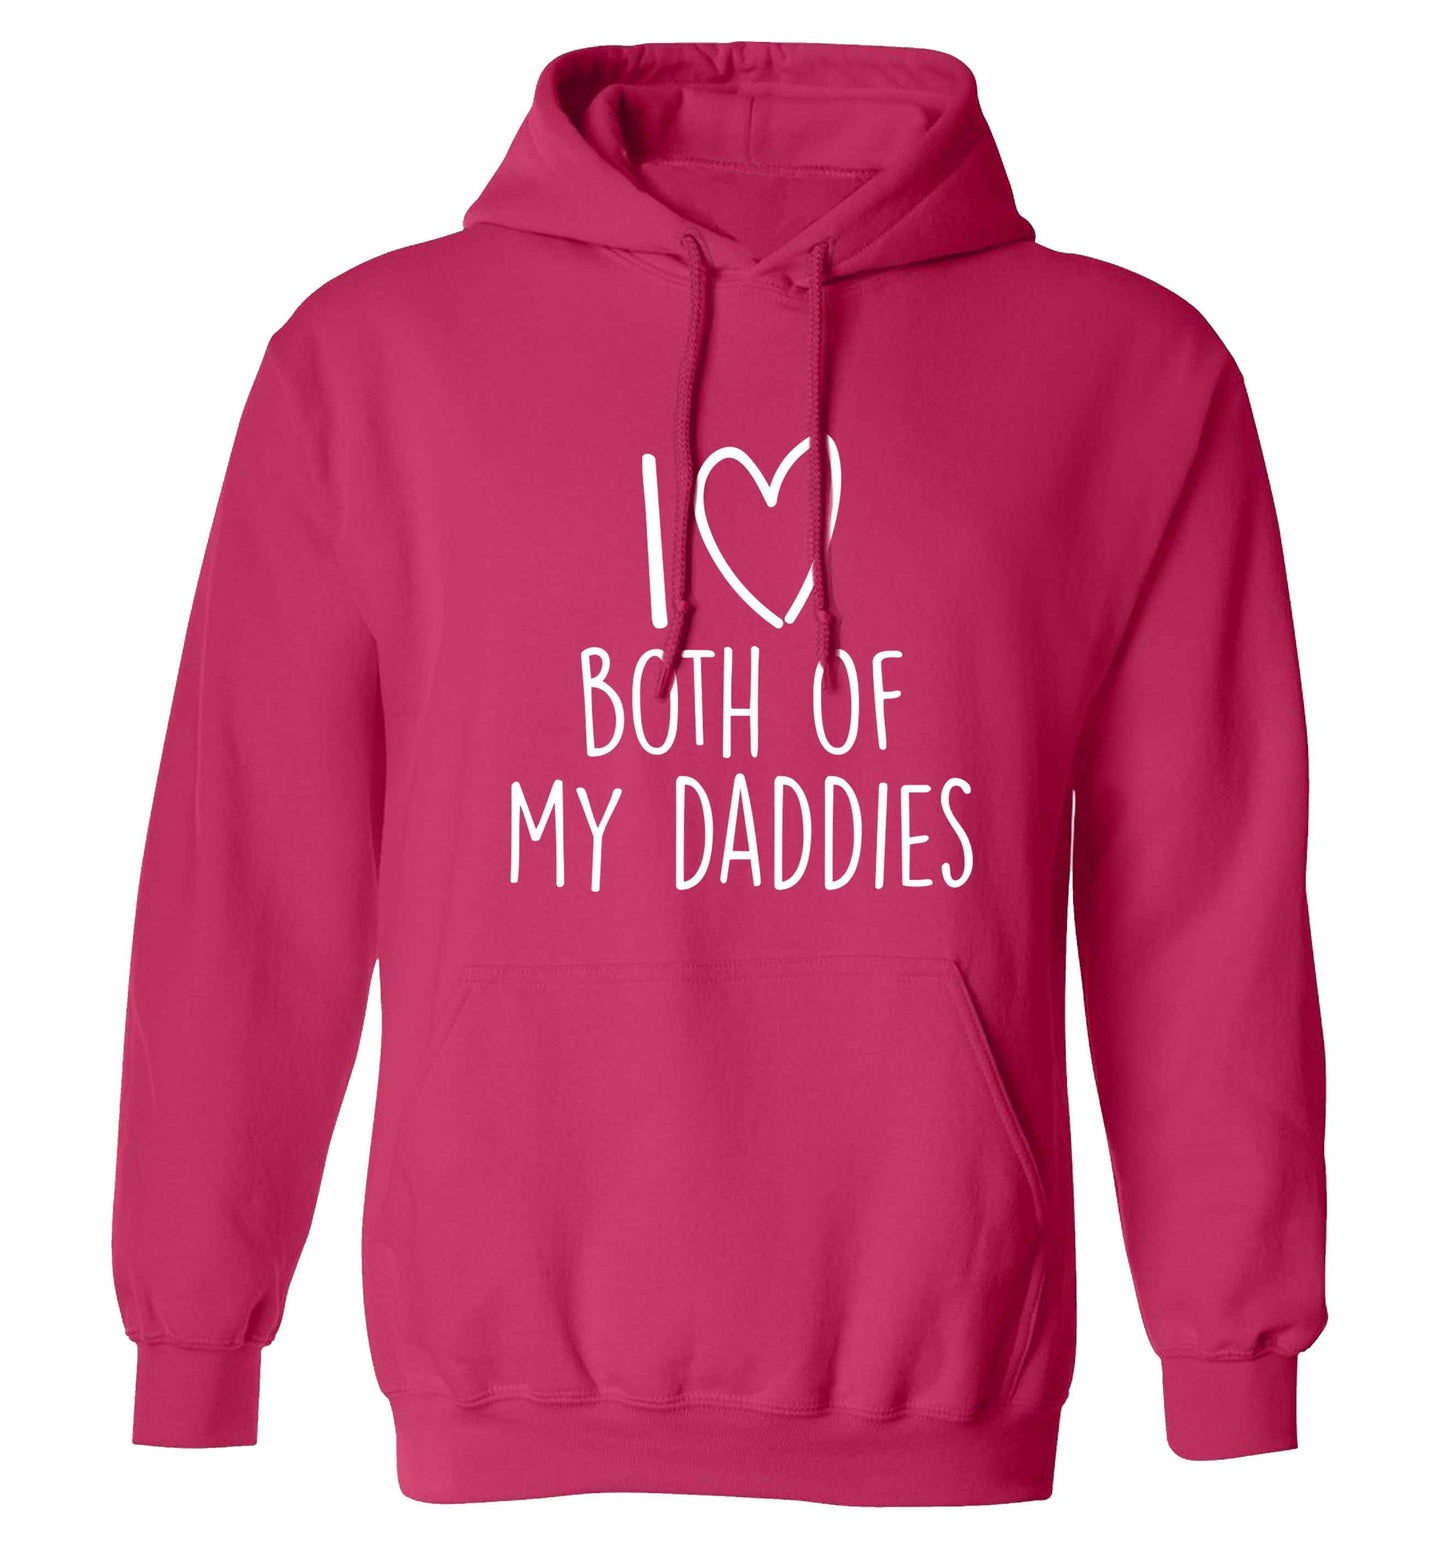 I love both of my daddies adults unisex pink hoodie 2XL